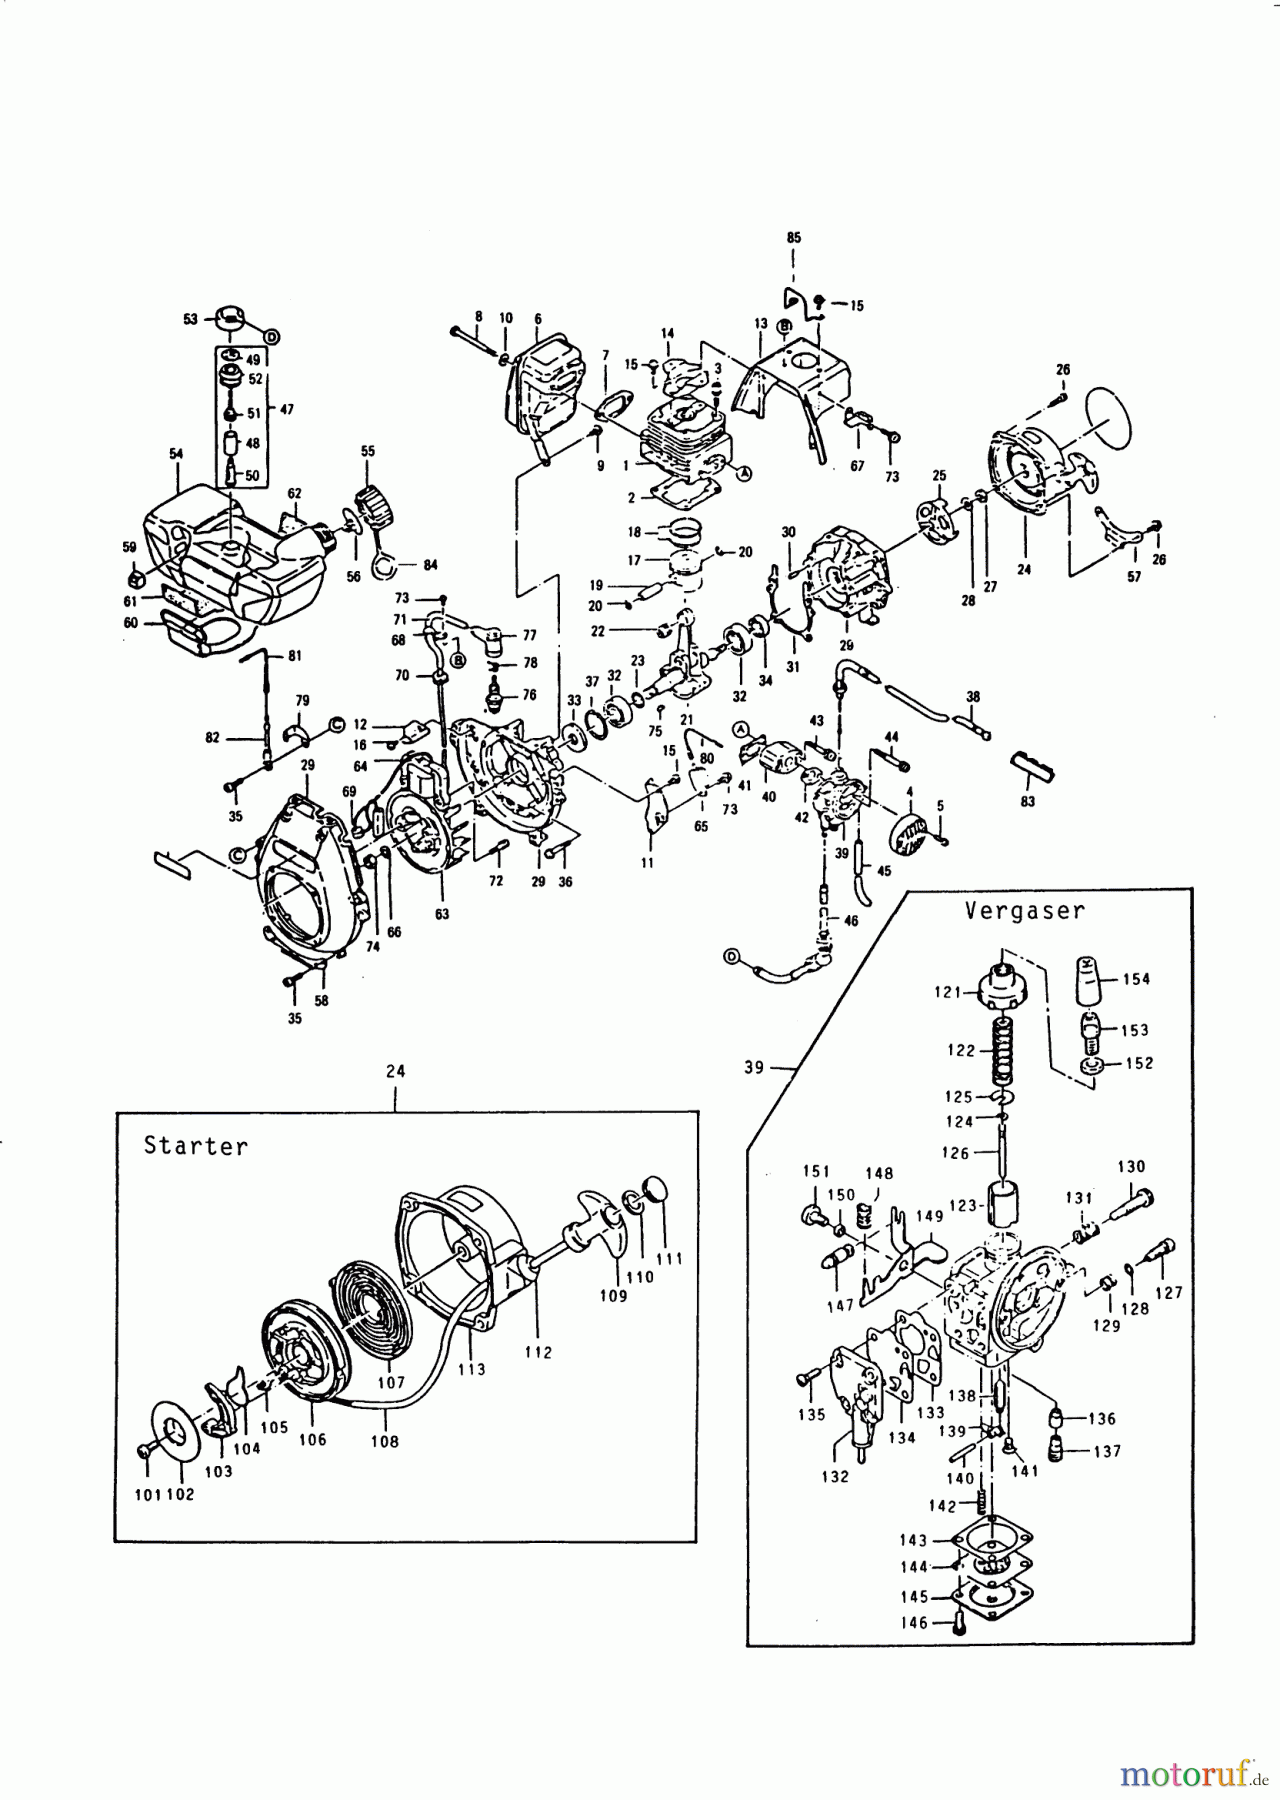  AL-KO Gartentechnik Motorsensen MS 400 Seite 2